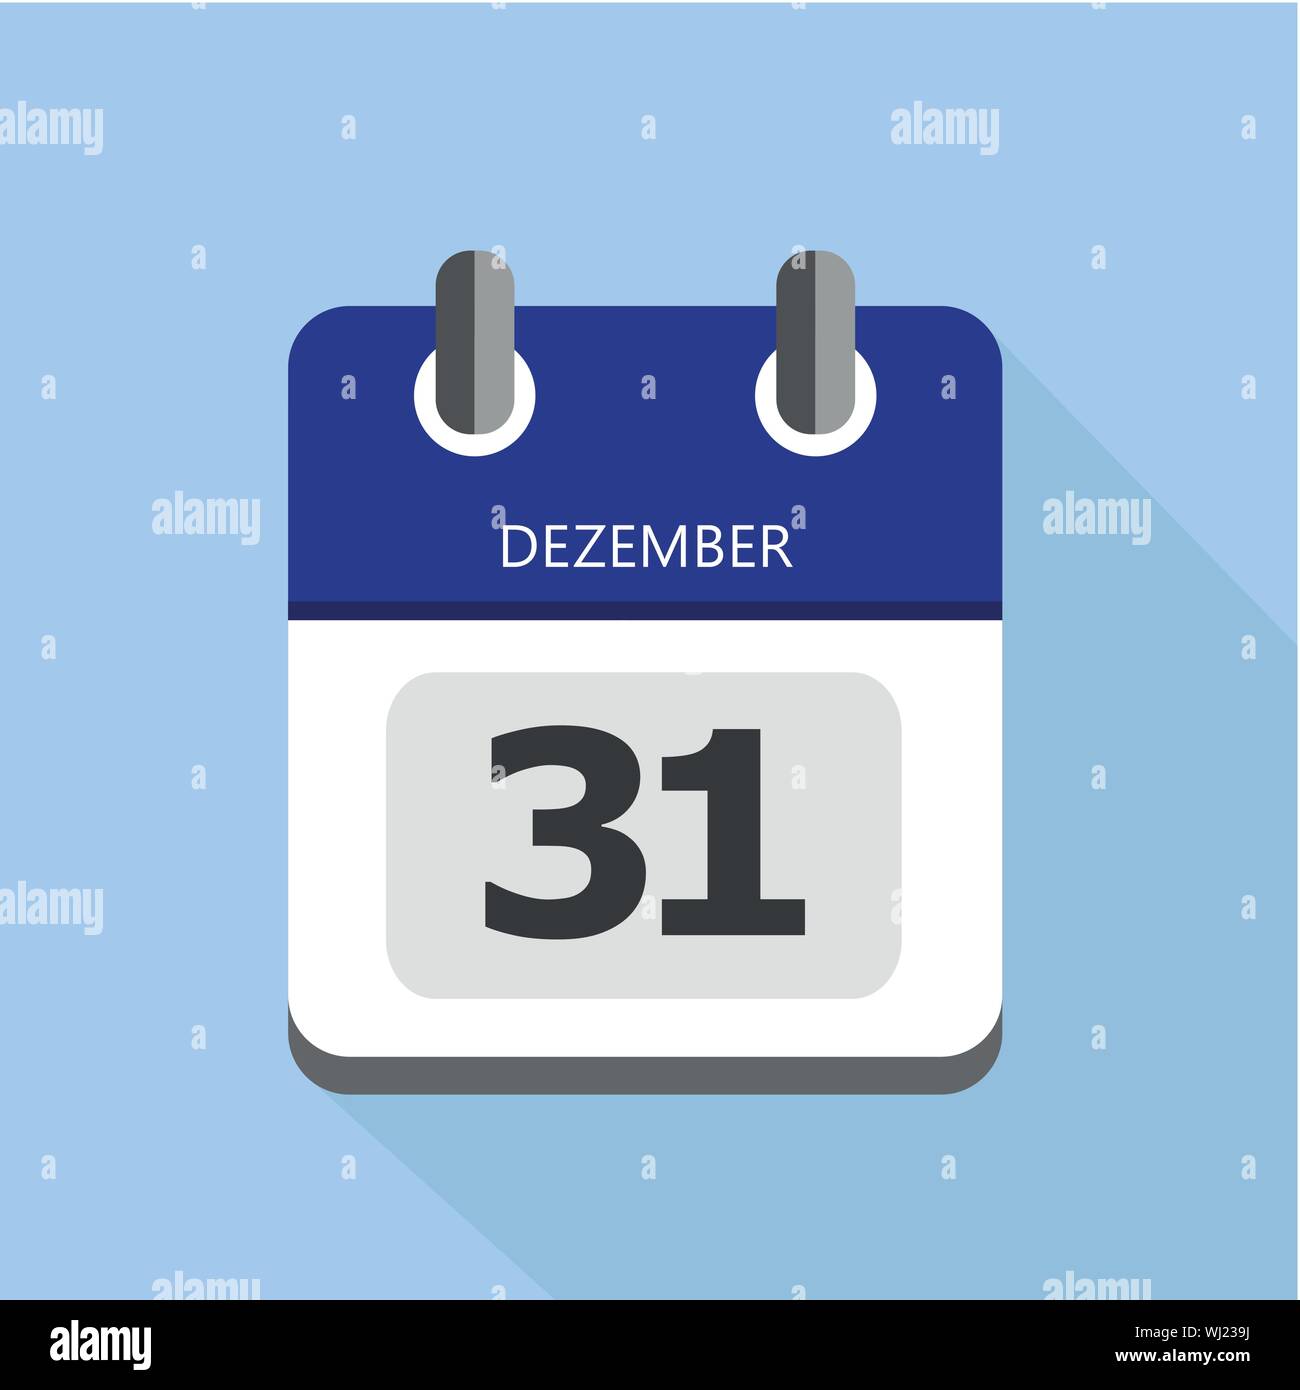 Kalender 31. Dezember auf blauem Hintergrund Vektor-illustration EPS 10. Stock Vektor